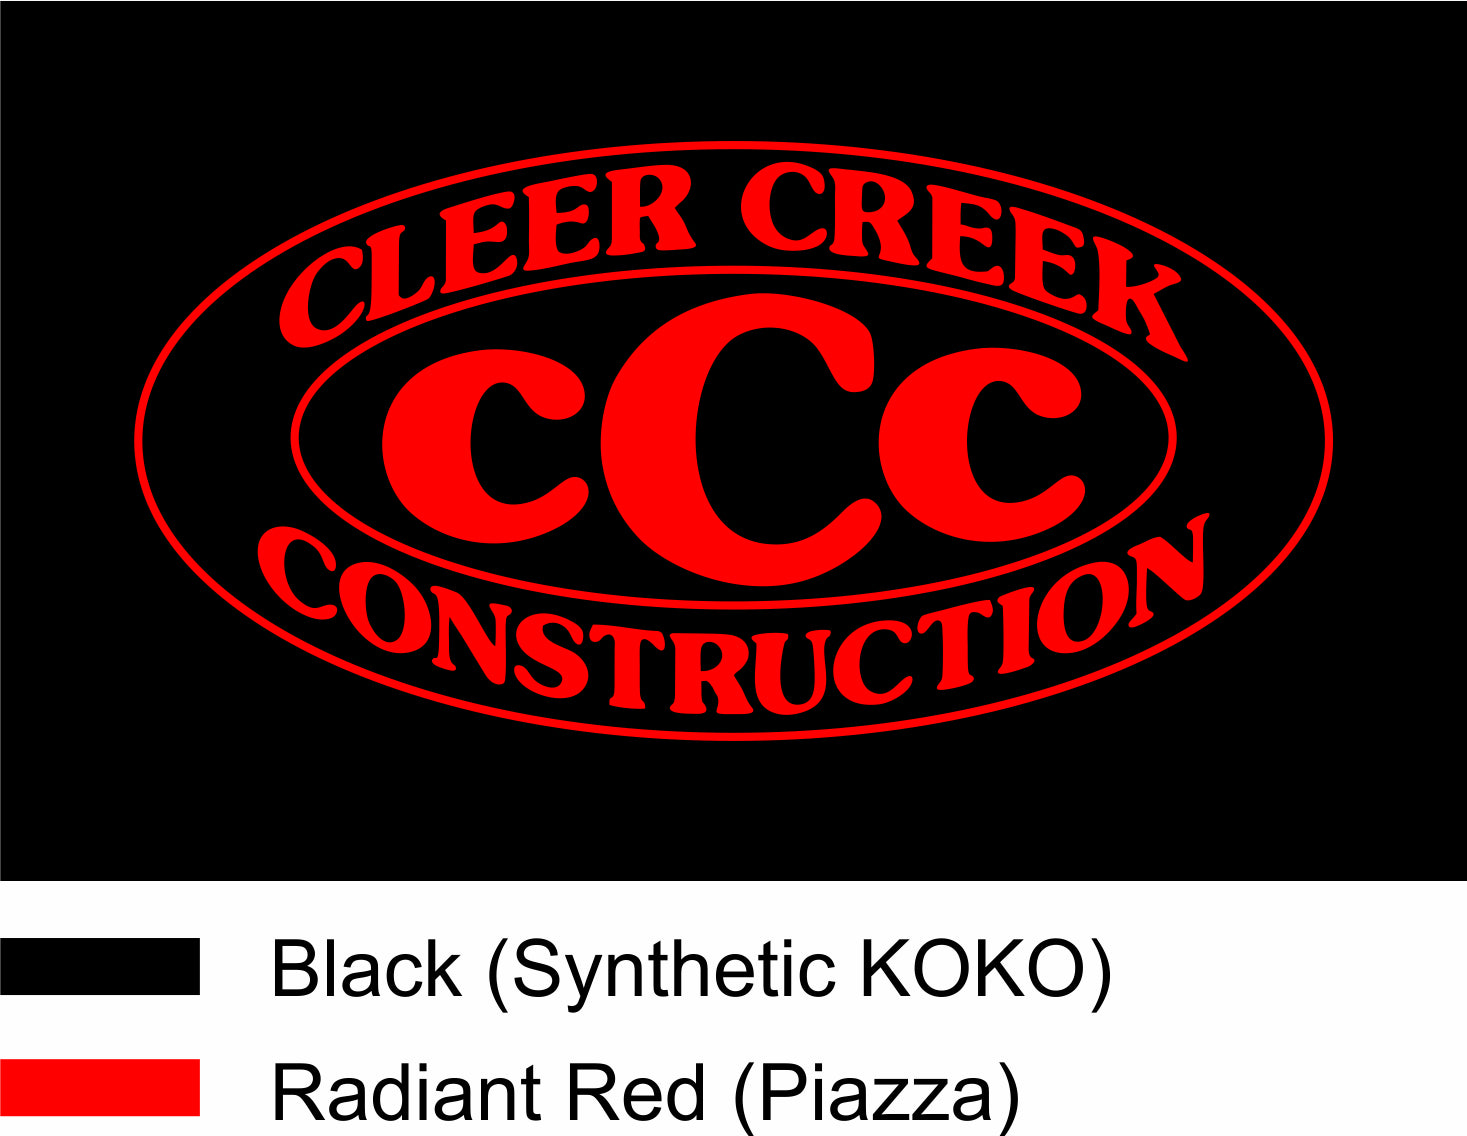 Cleer Creek Construction LLC §